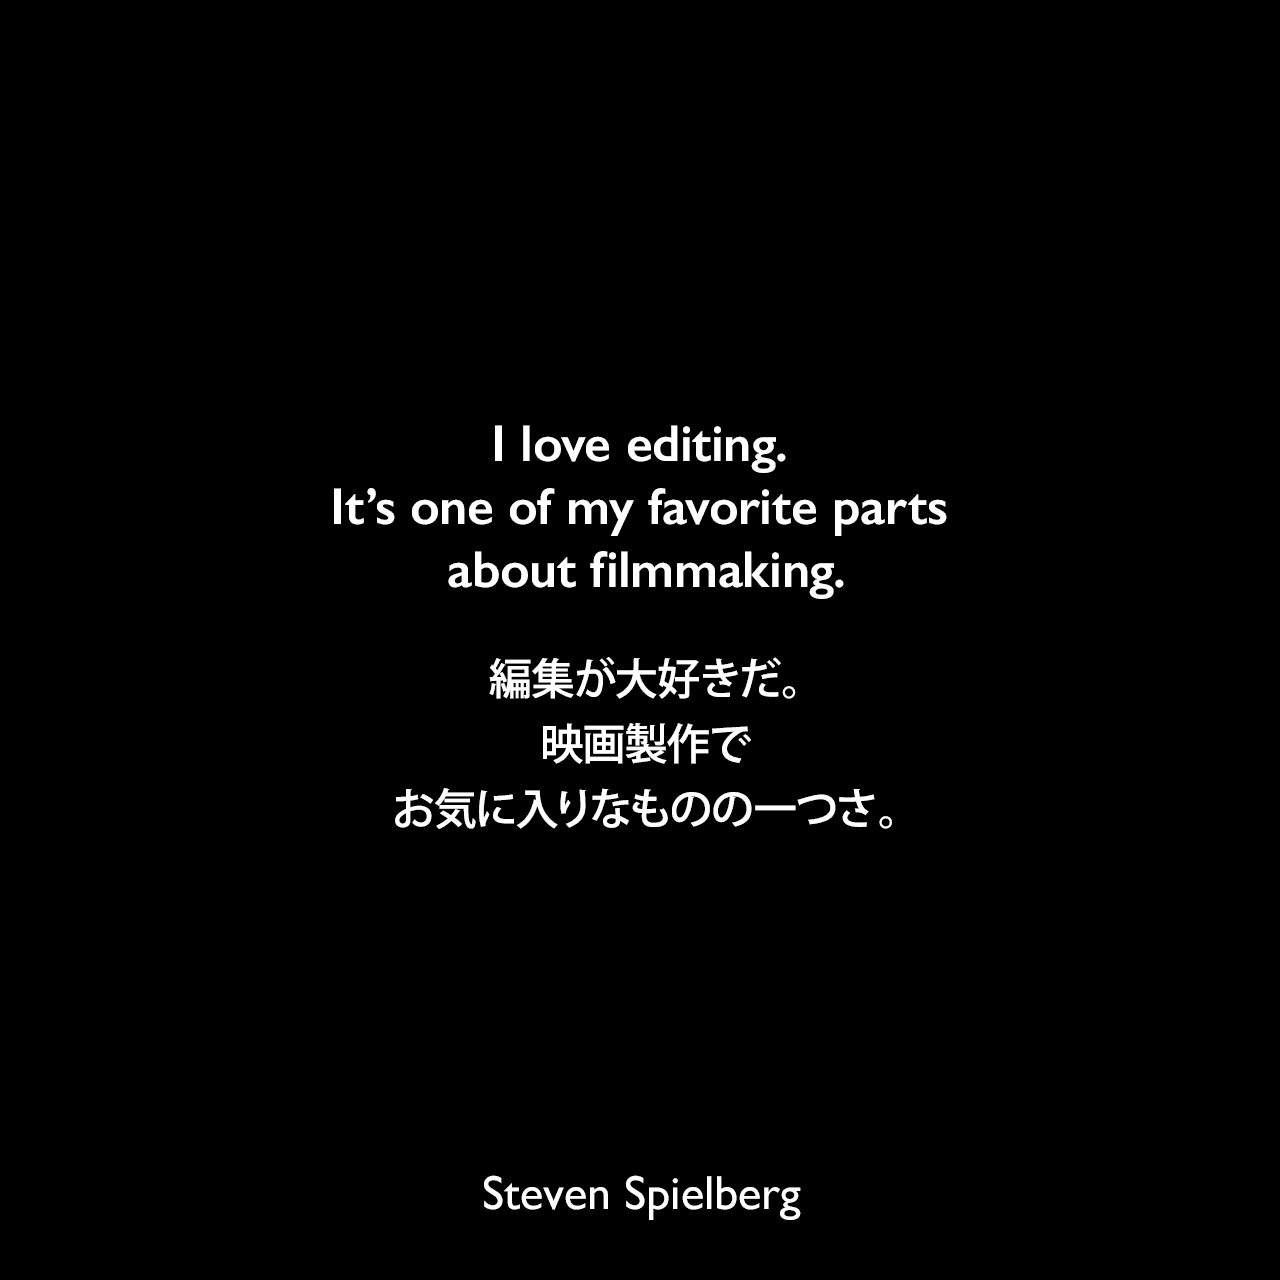 I love editing. It’s one of my favorite parts about filmmaking.編集が大好きだ。映画製作でお気に入りなものの一つさ。Steven Spielberg